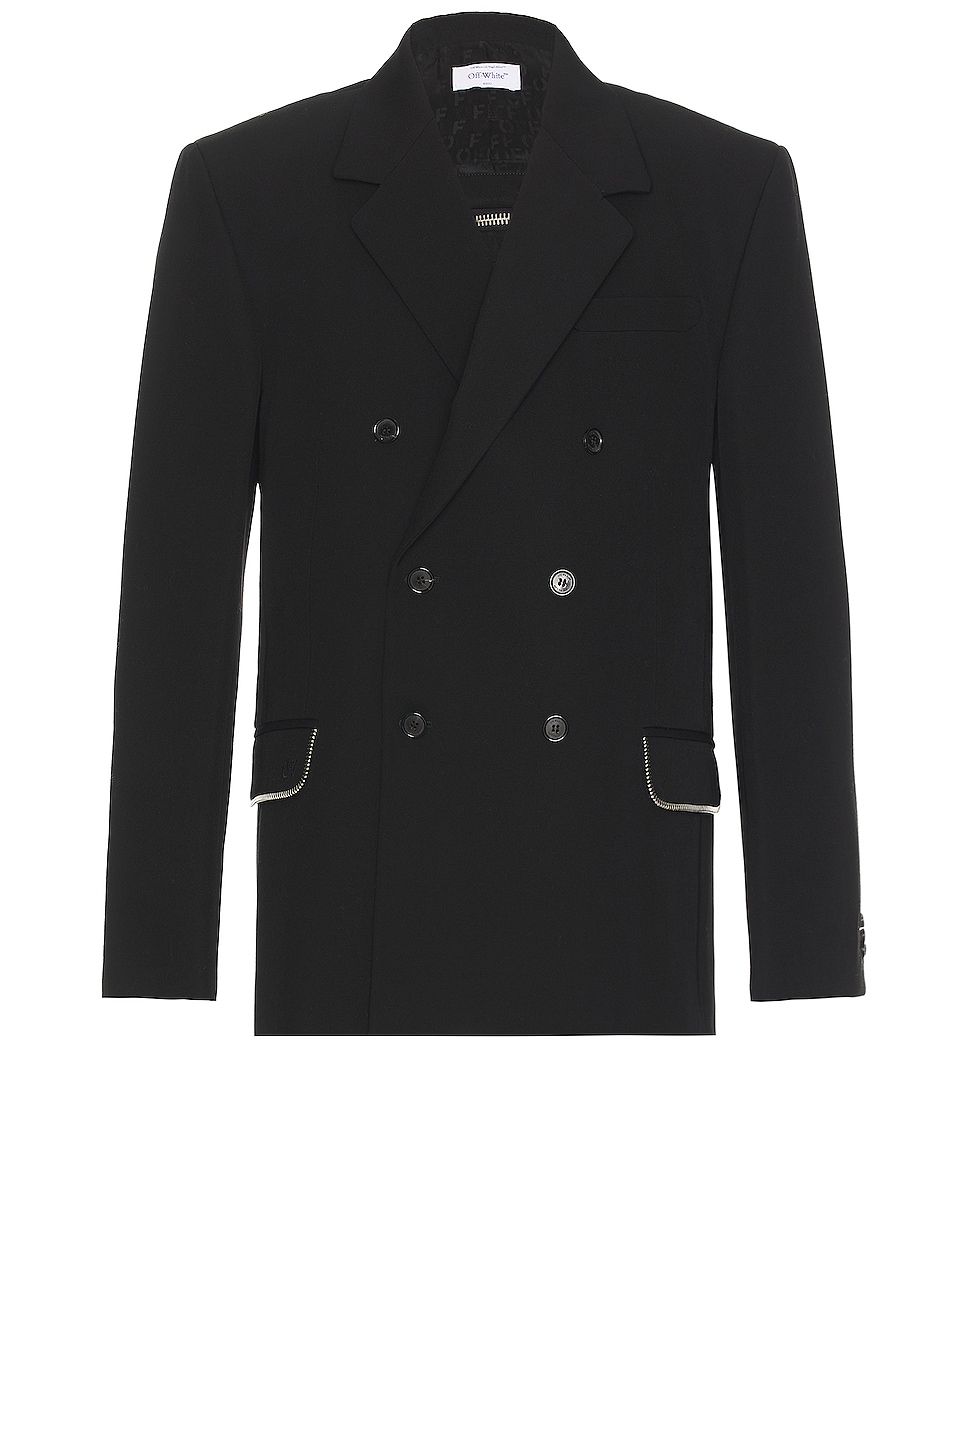 Image 1 of OFF-WHITE Zip Jacket in Black